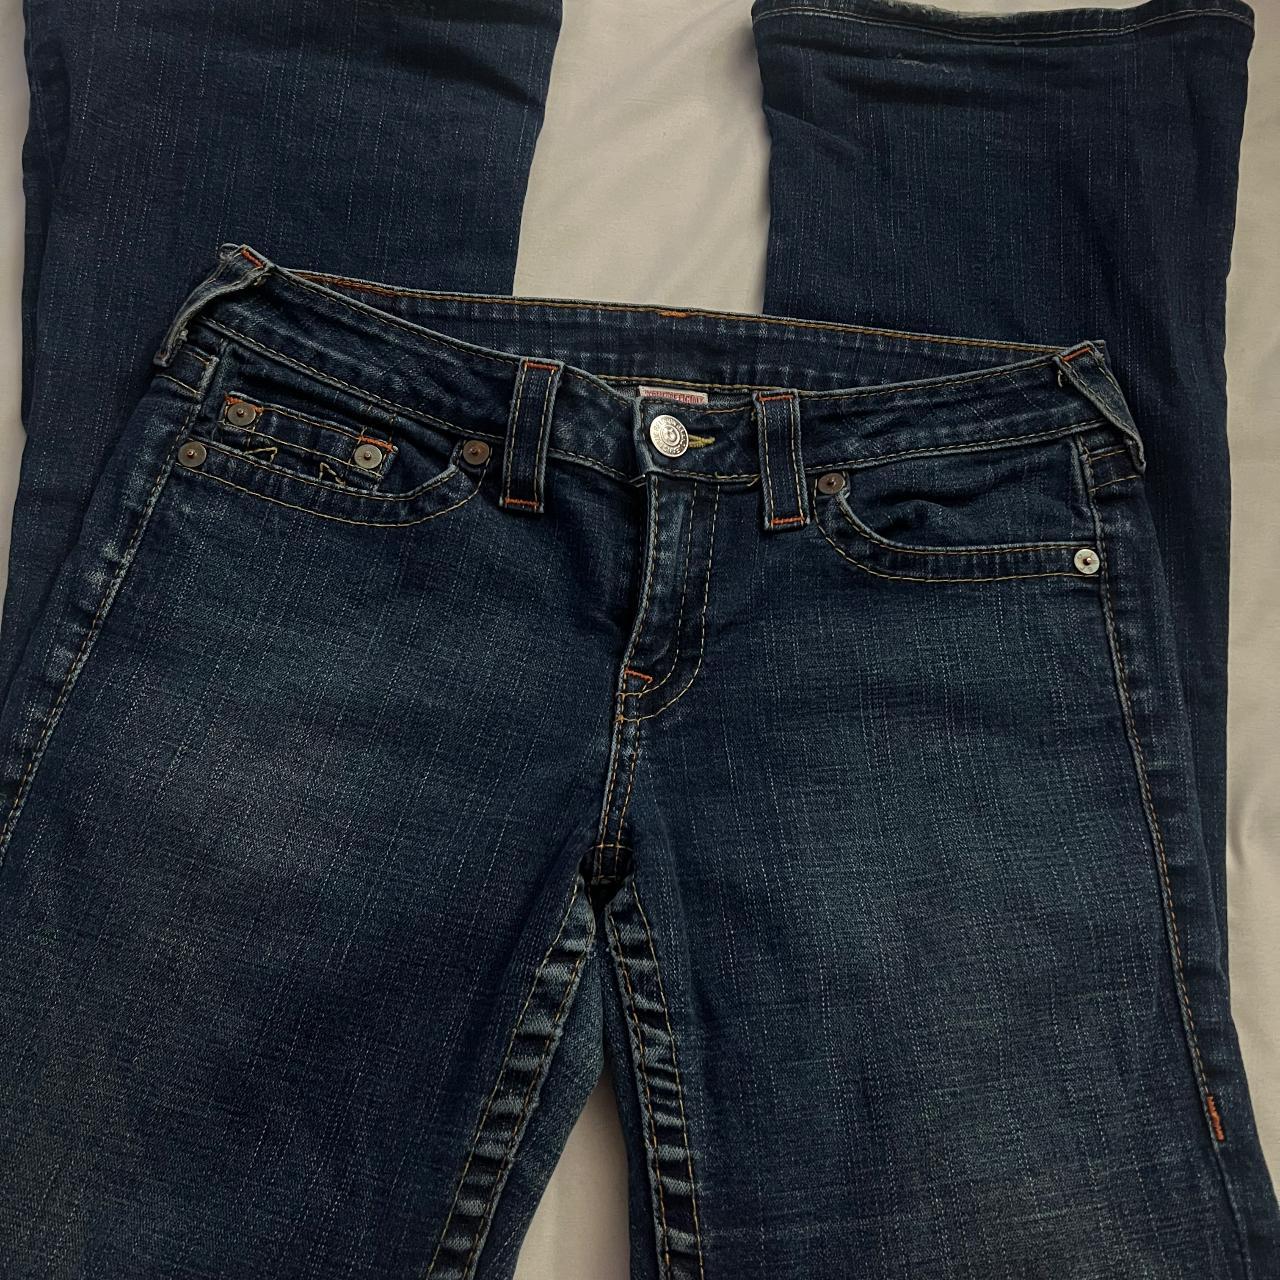 True religion jeans ⭐️ super cute bootcut jeans very... - Depop